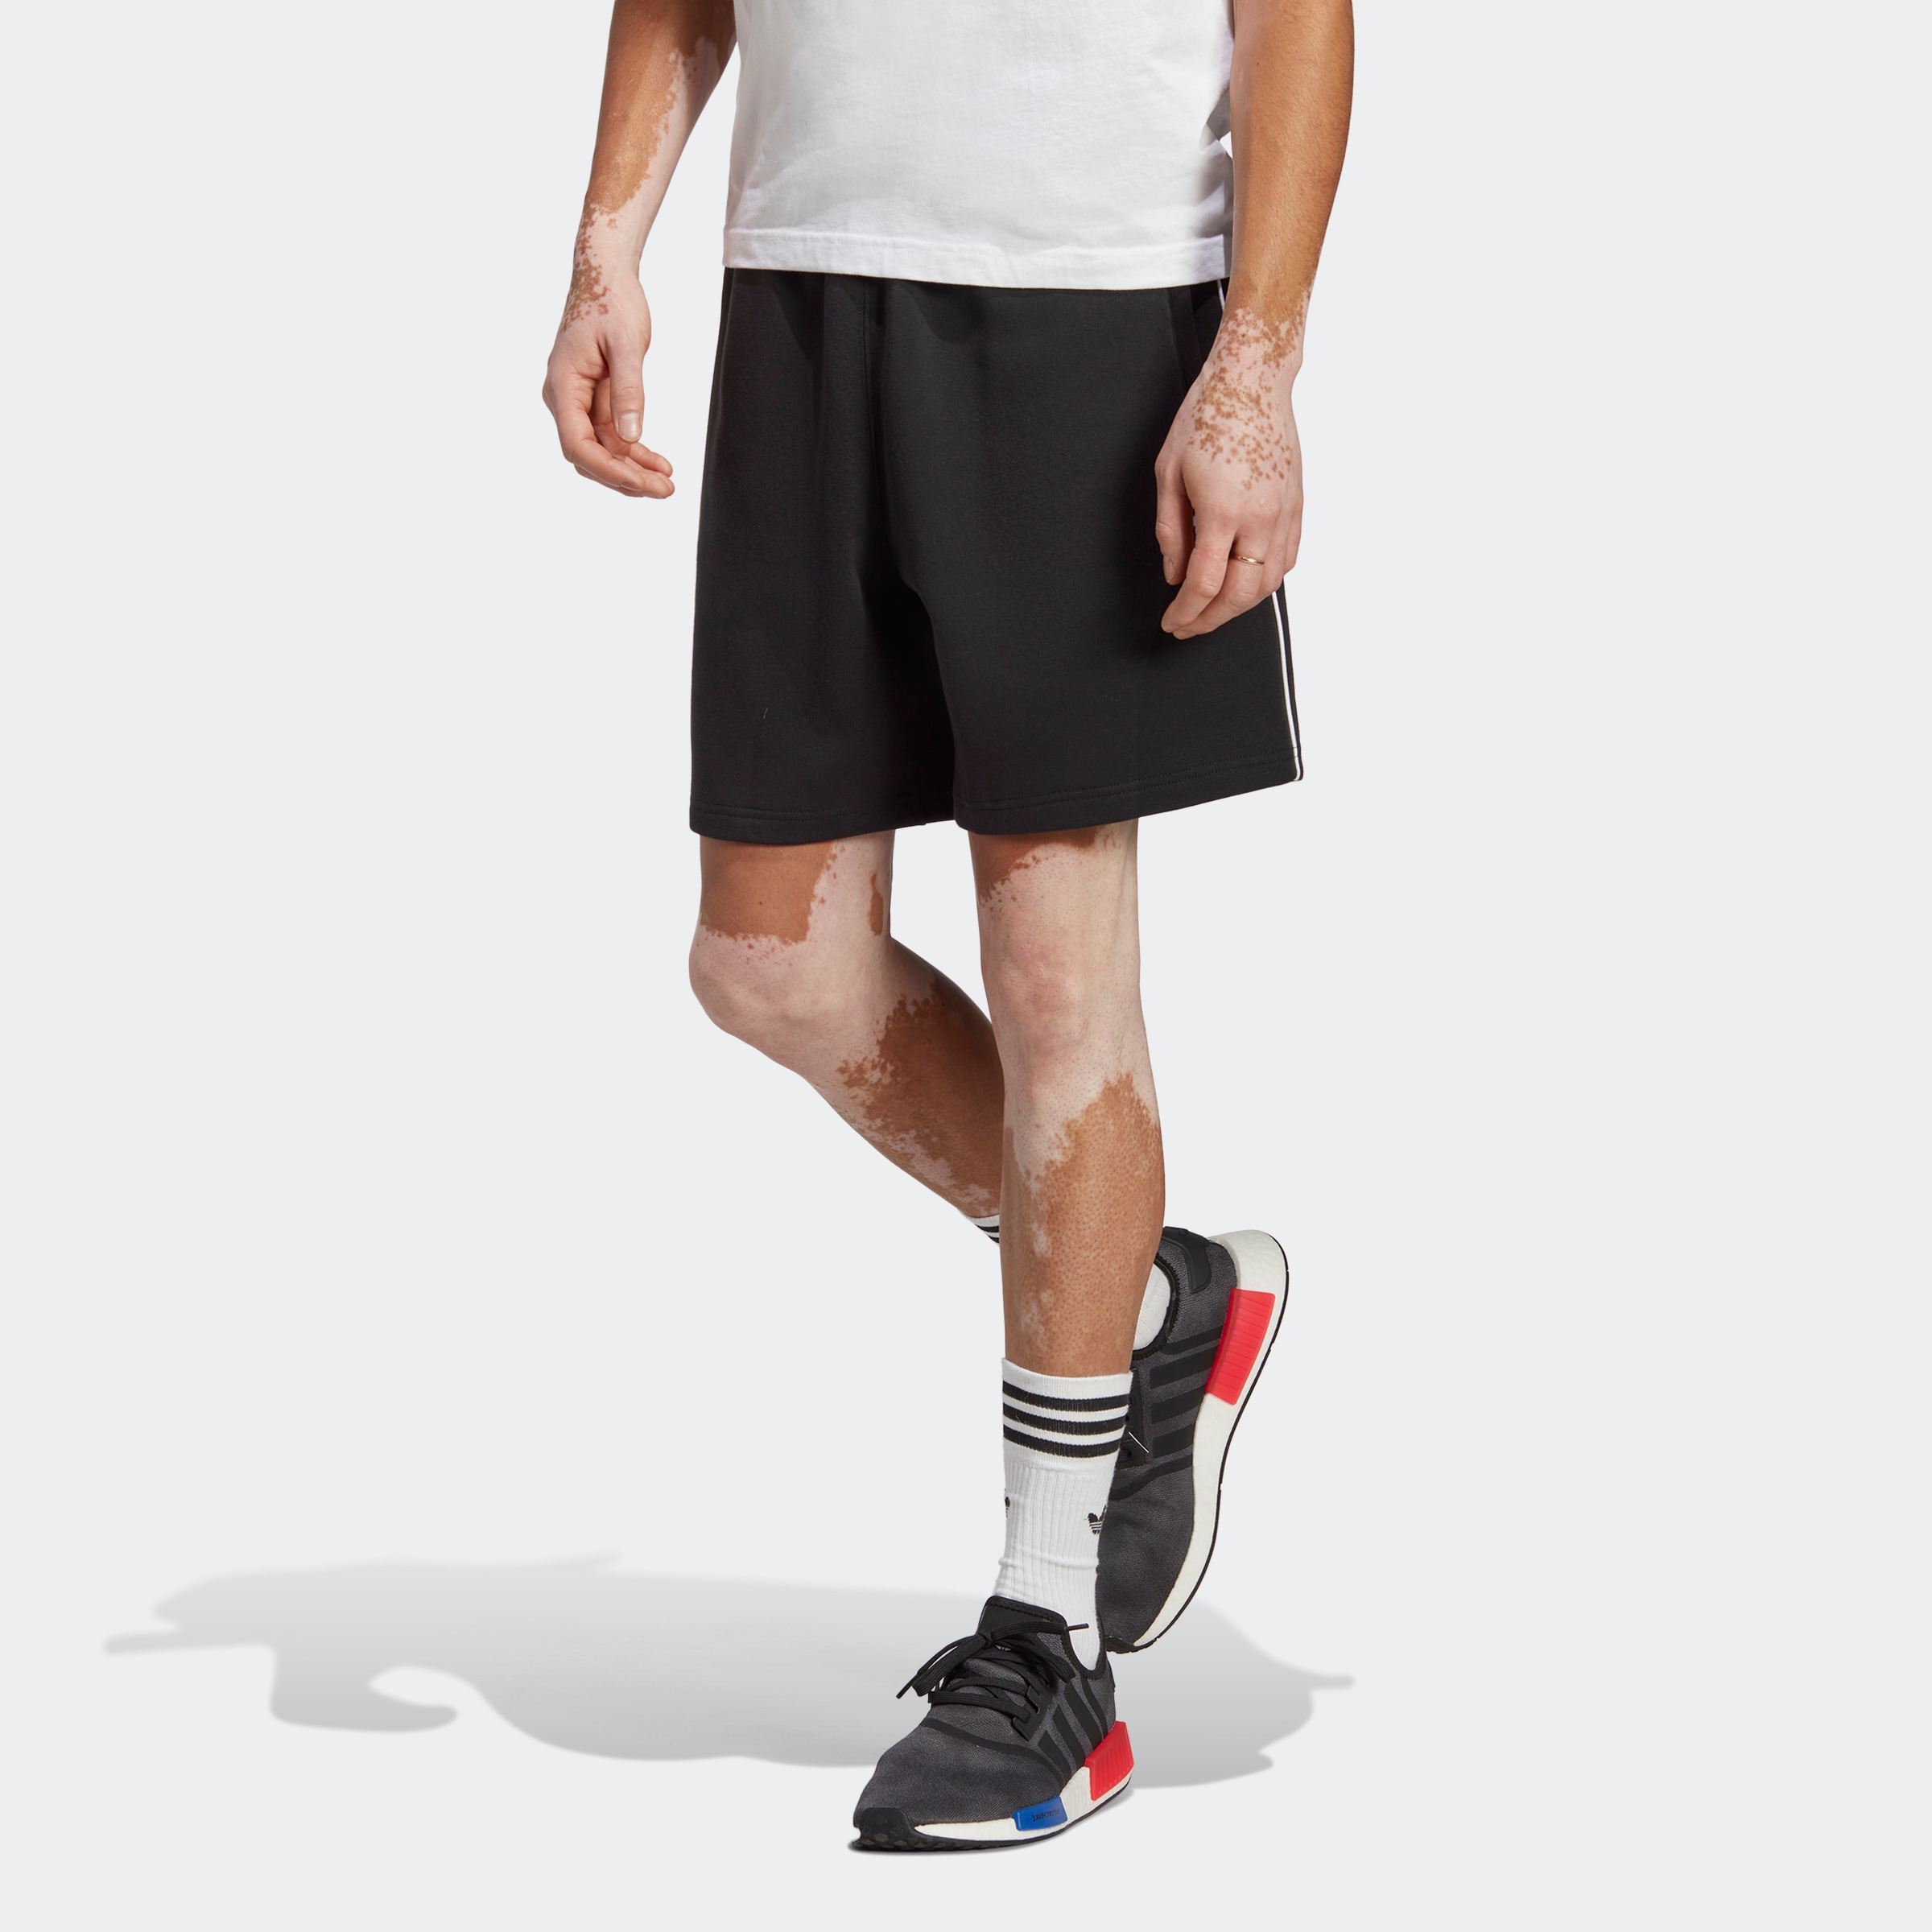 adidas SEASONAL shoppen online Shorts bei »ADICOLOR tlg.) ARCHIVE«, Originals (1 OTTO